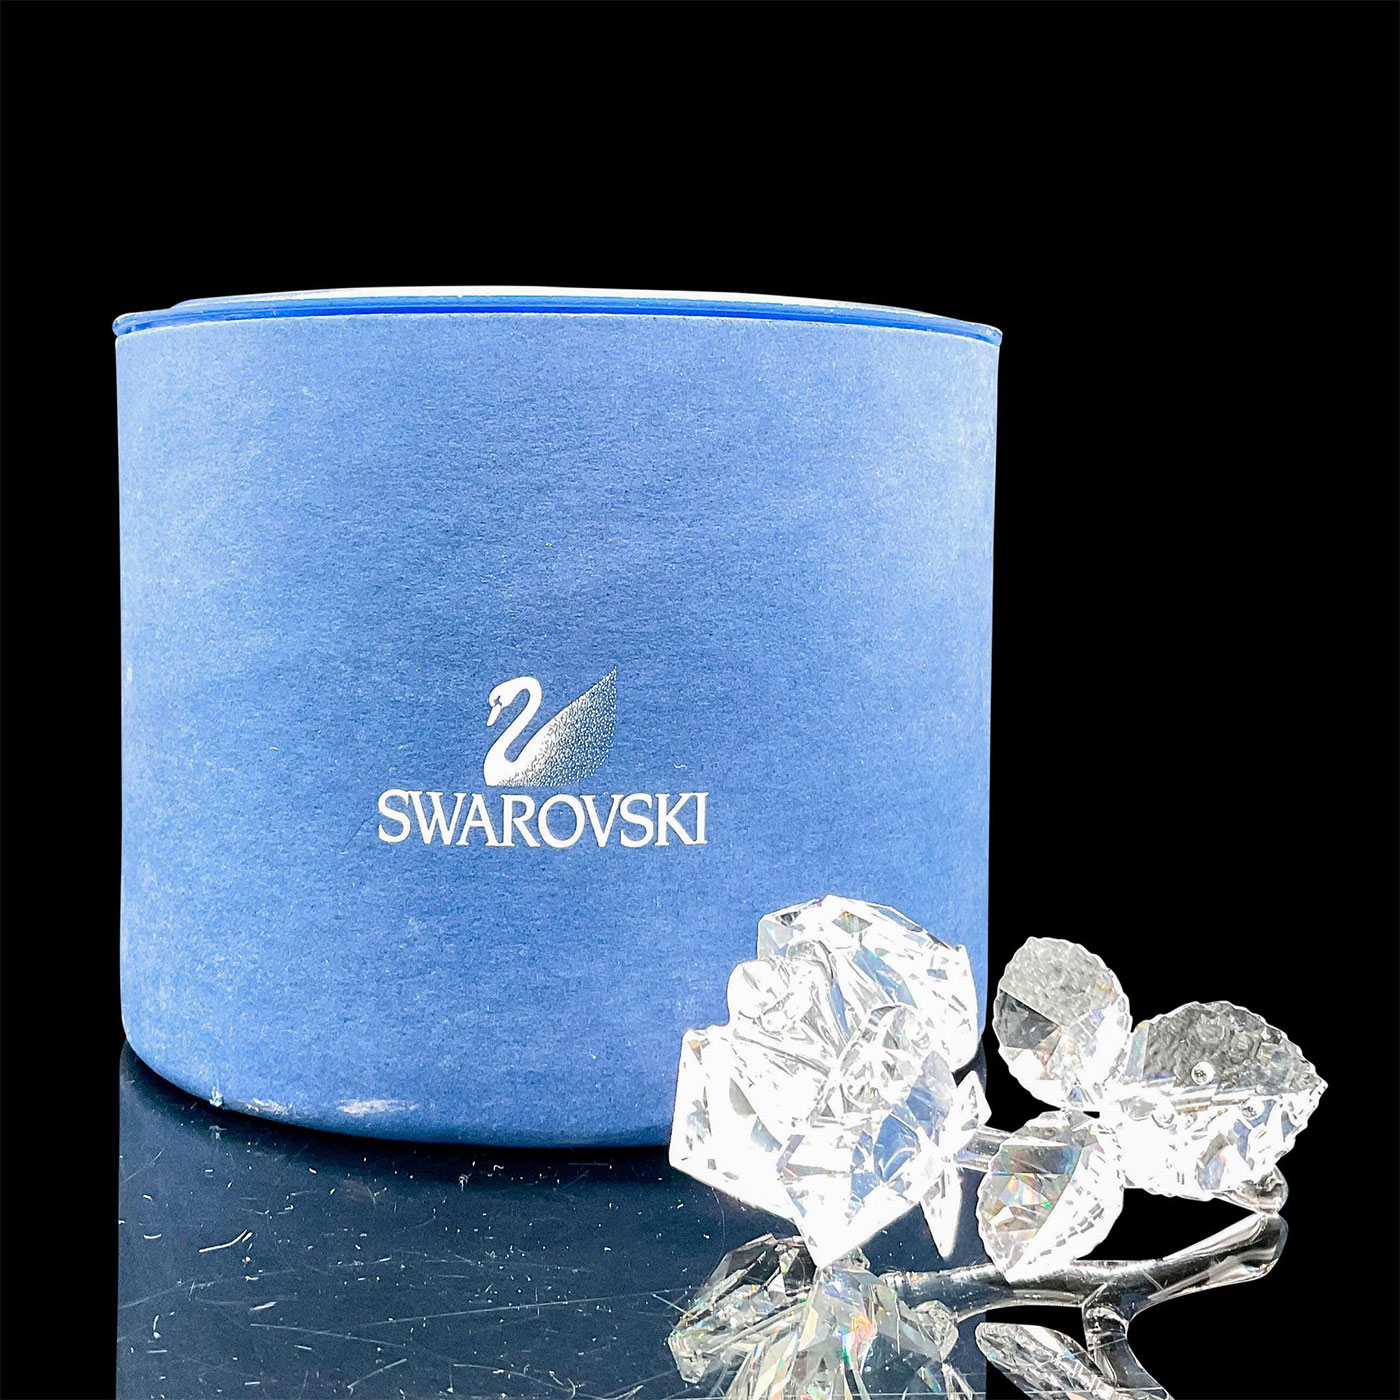 Swarovski Crystal Figurine, The Rose - Image 2 of 3